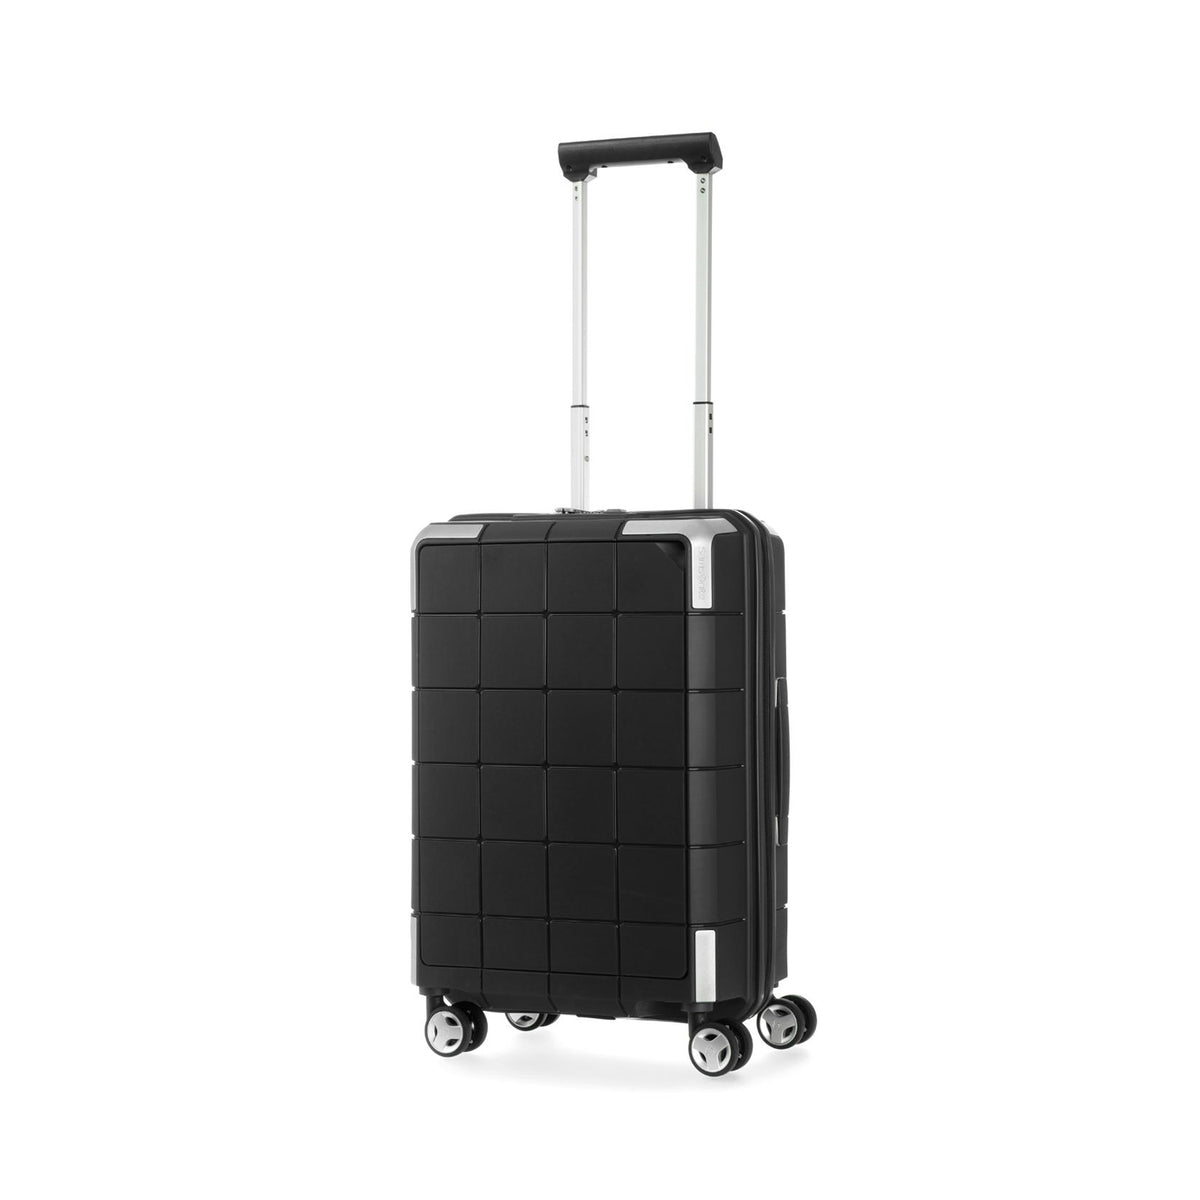 Samsonite CUBE-048 Spinner 55/20 Front Pocket Luggage